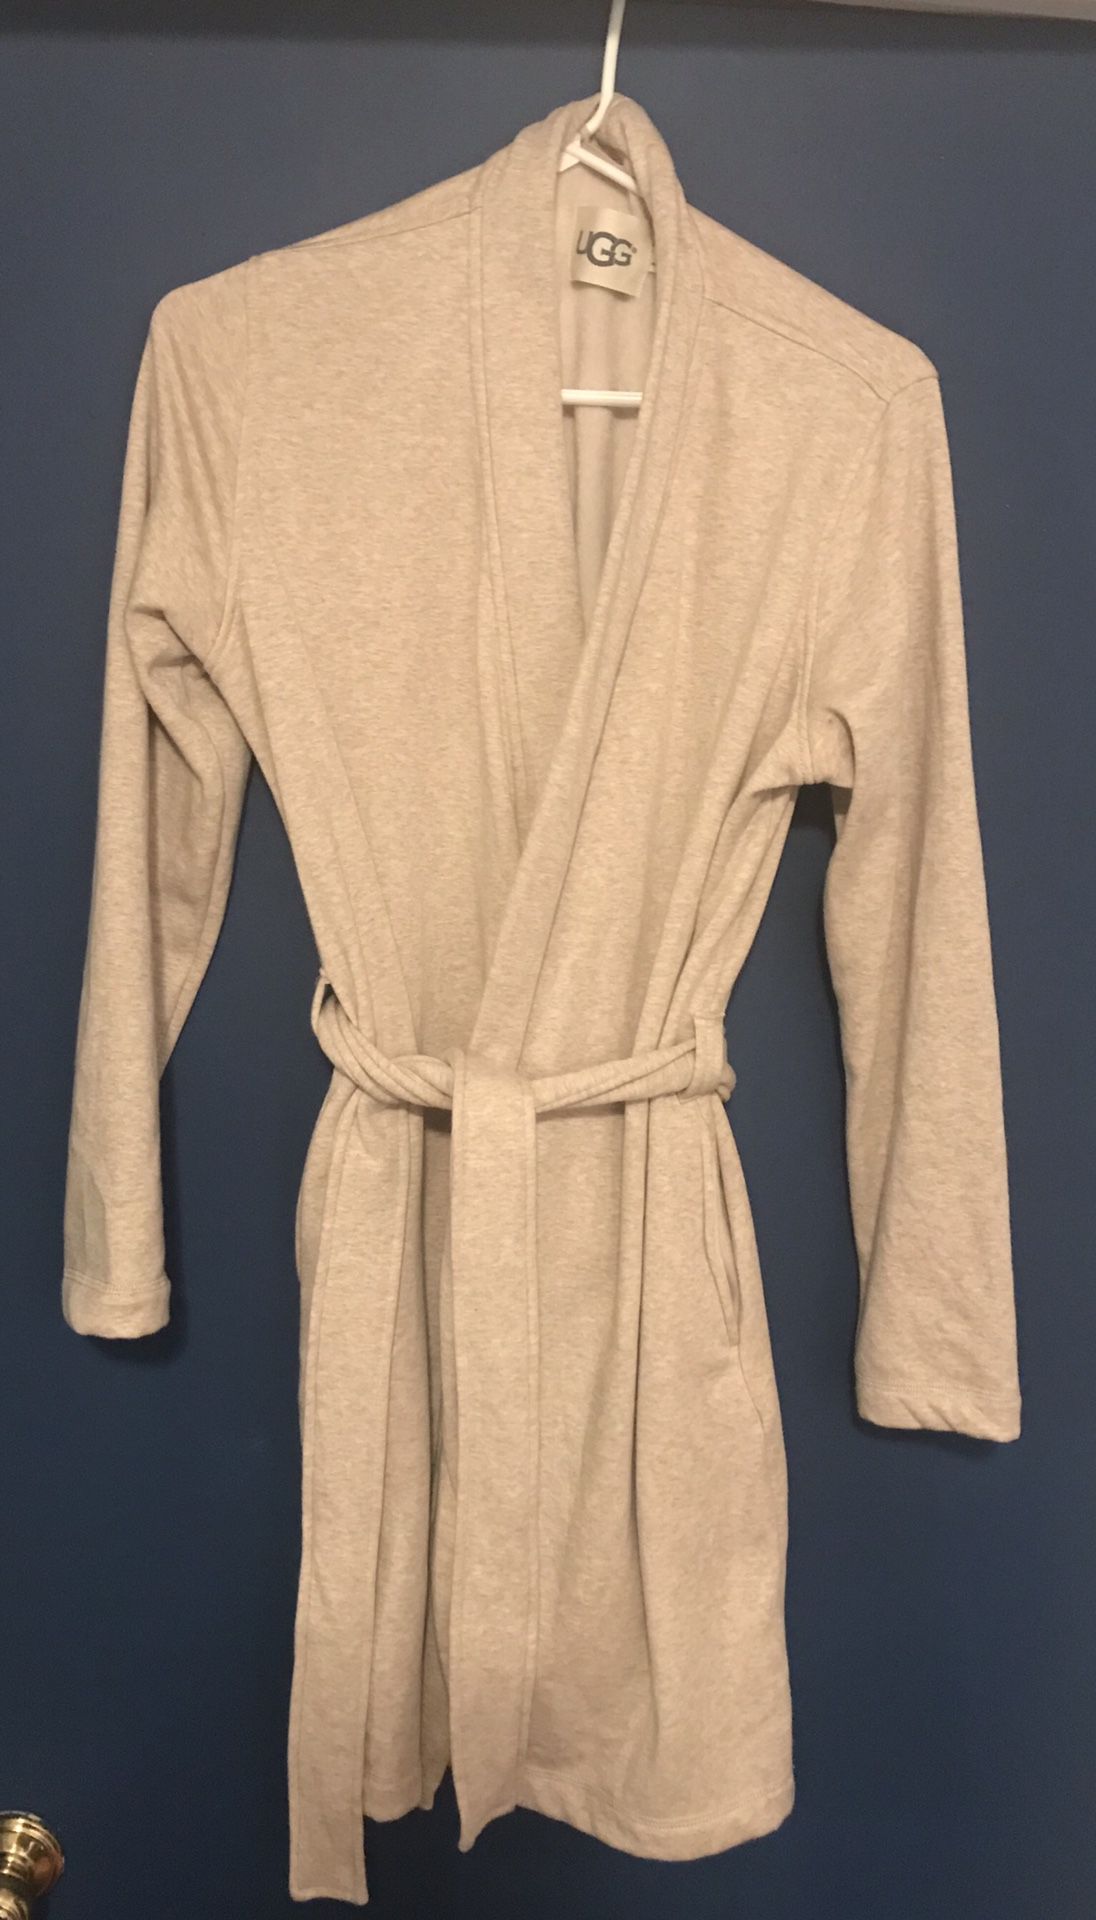 Ugg robe - small